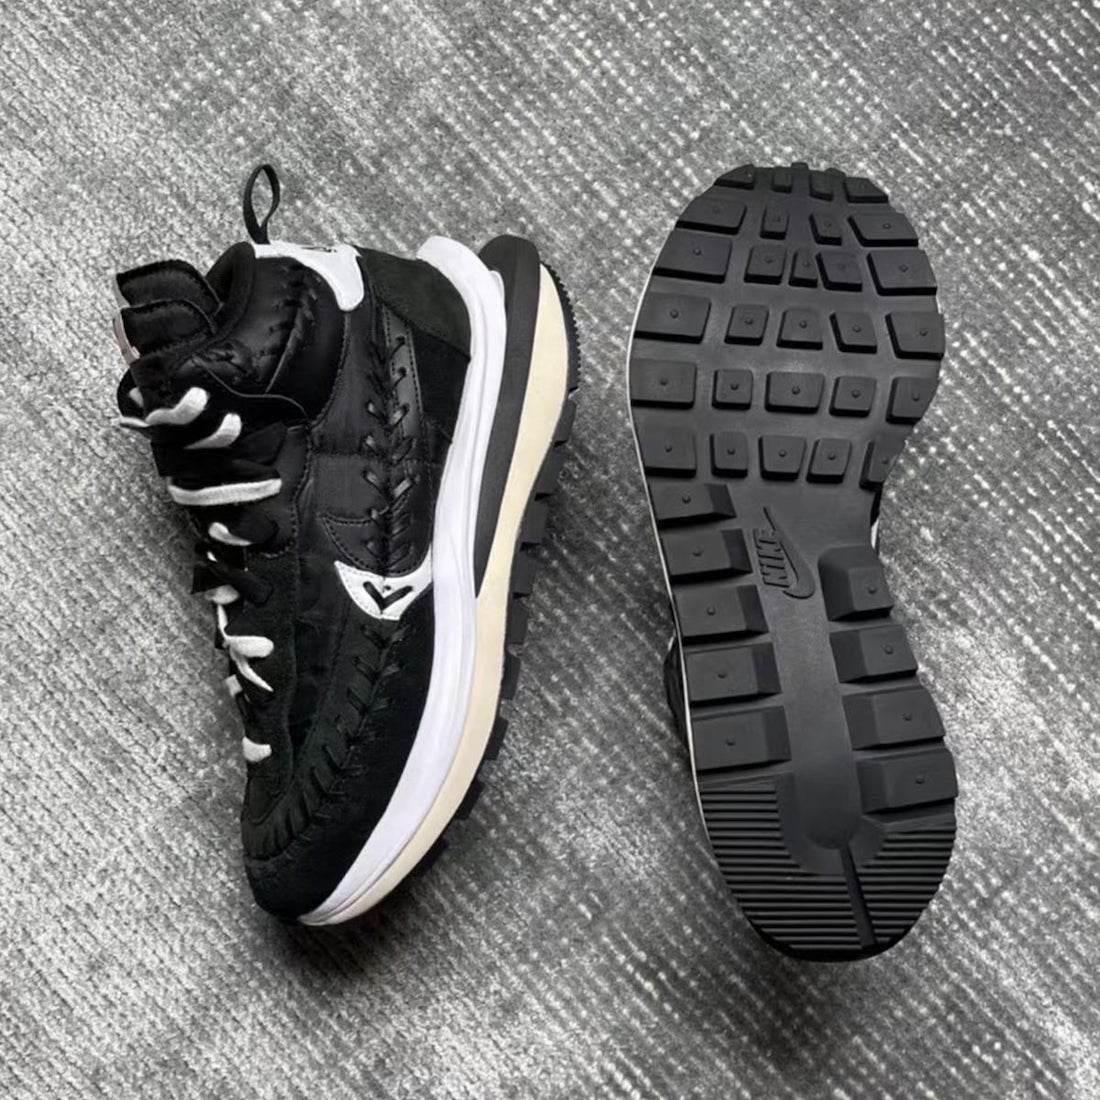 Sacai Jean Paul Gaultier Nike VaporWaffle Black White Release Date